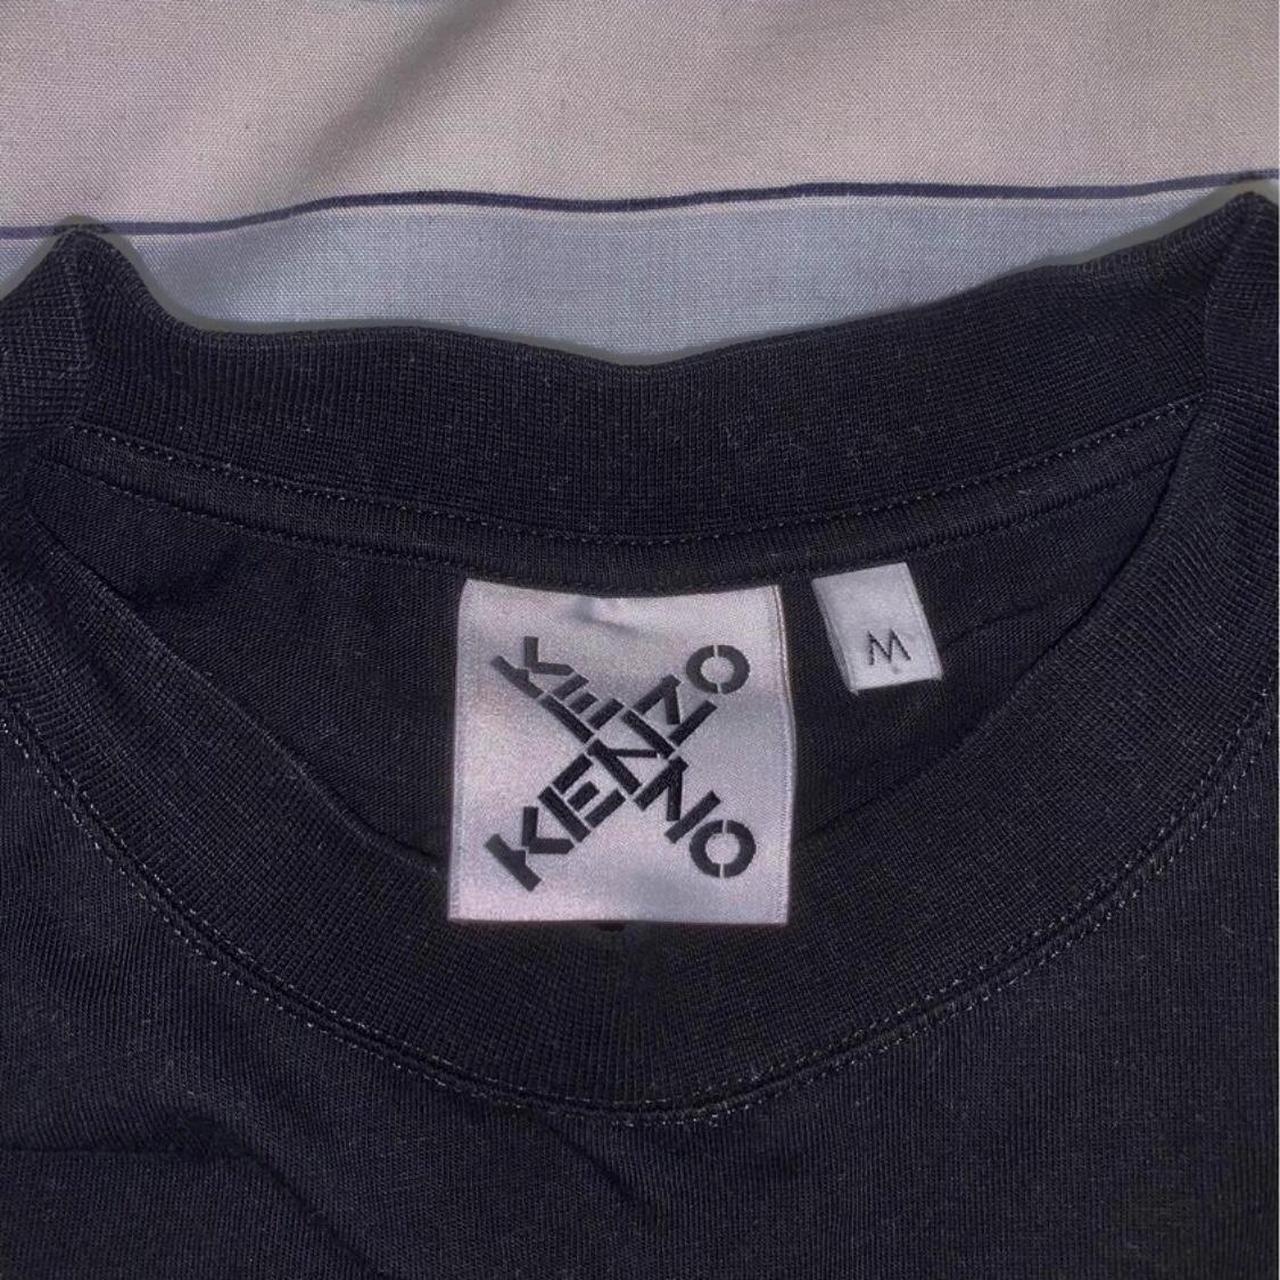 Kenzo t shirt Size m but fits L - Depop